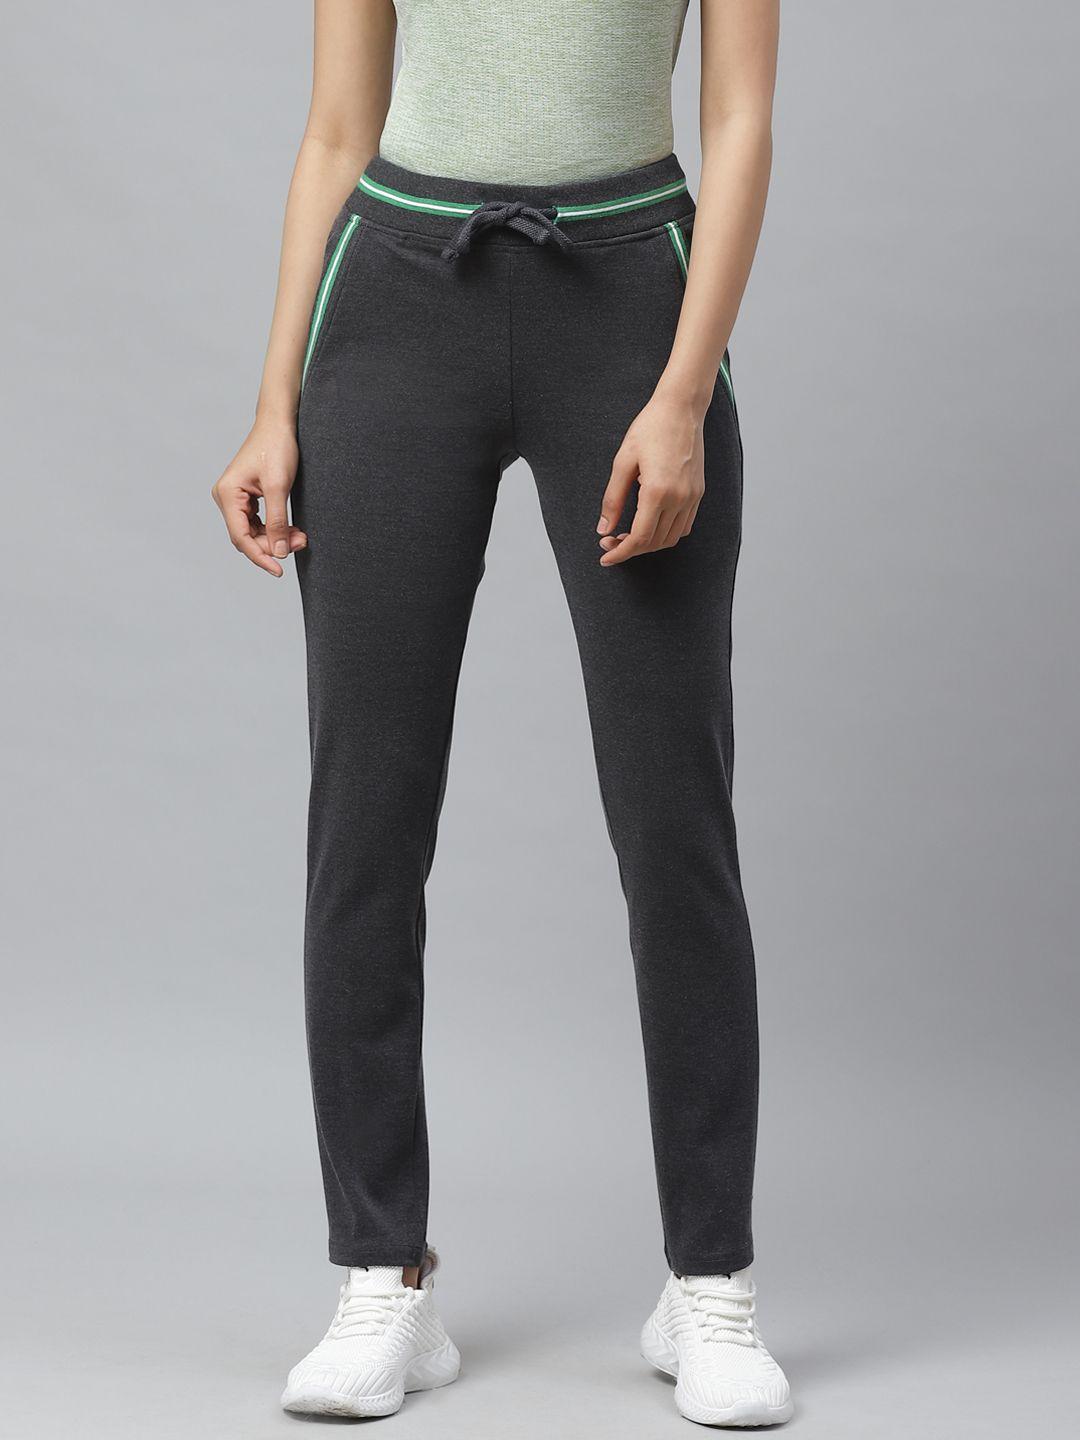 cayman-women-charcoal-grey-solid-track-pants